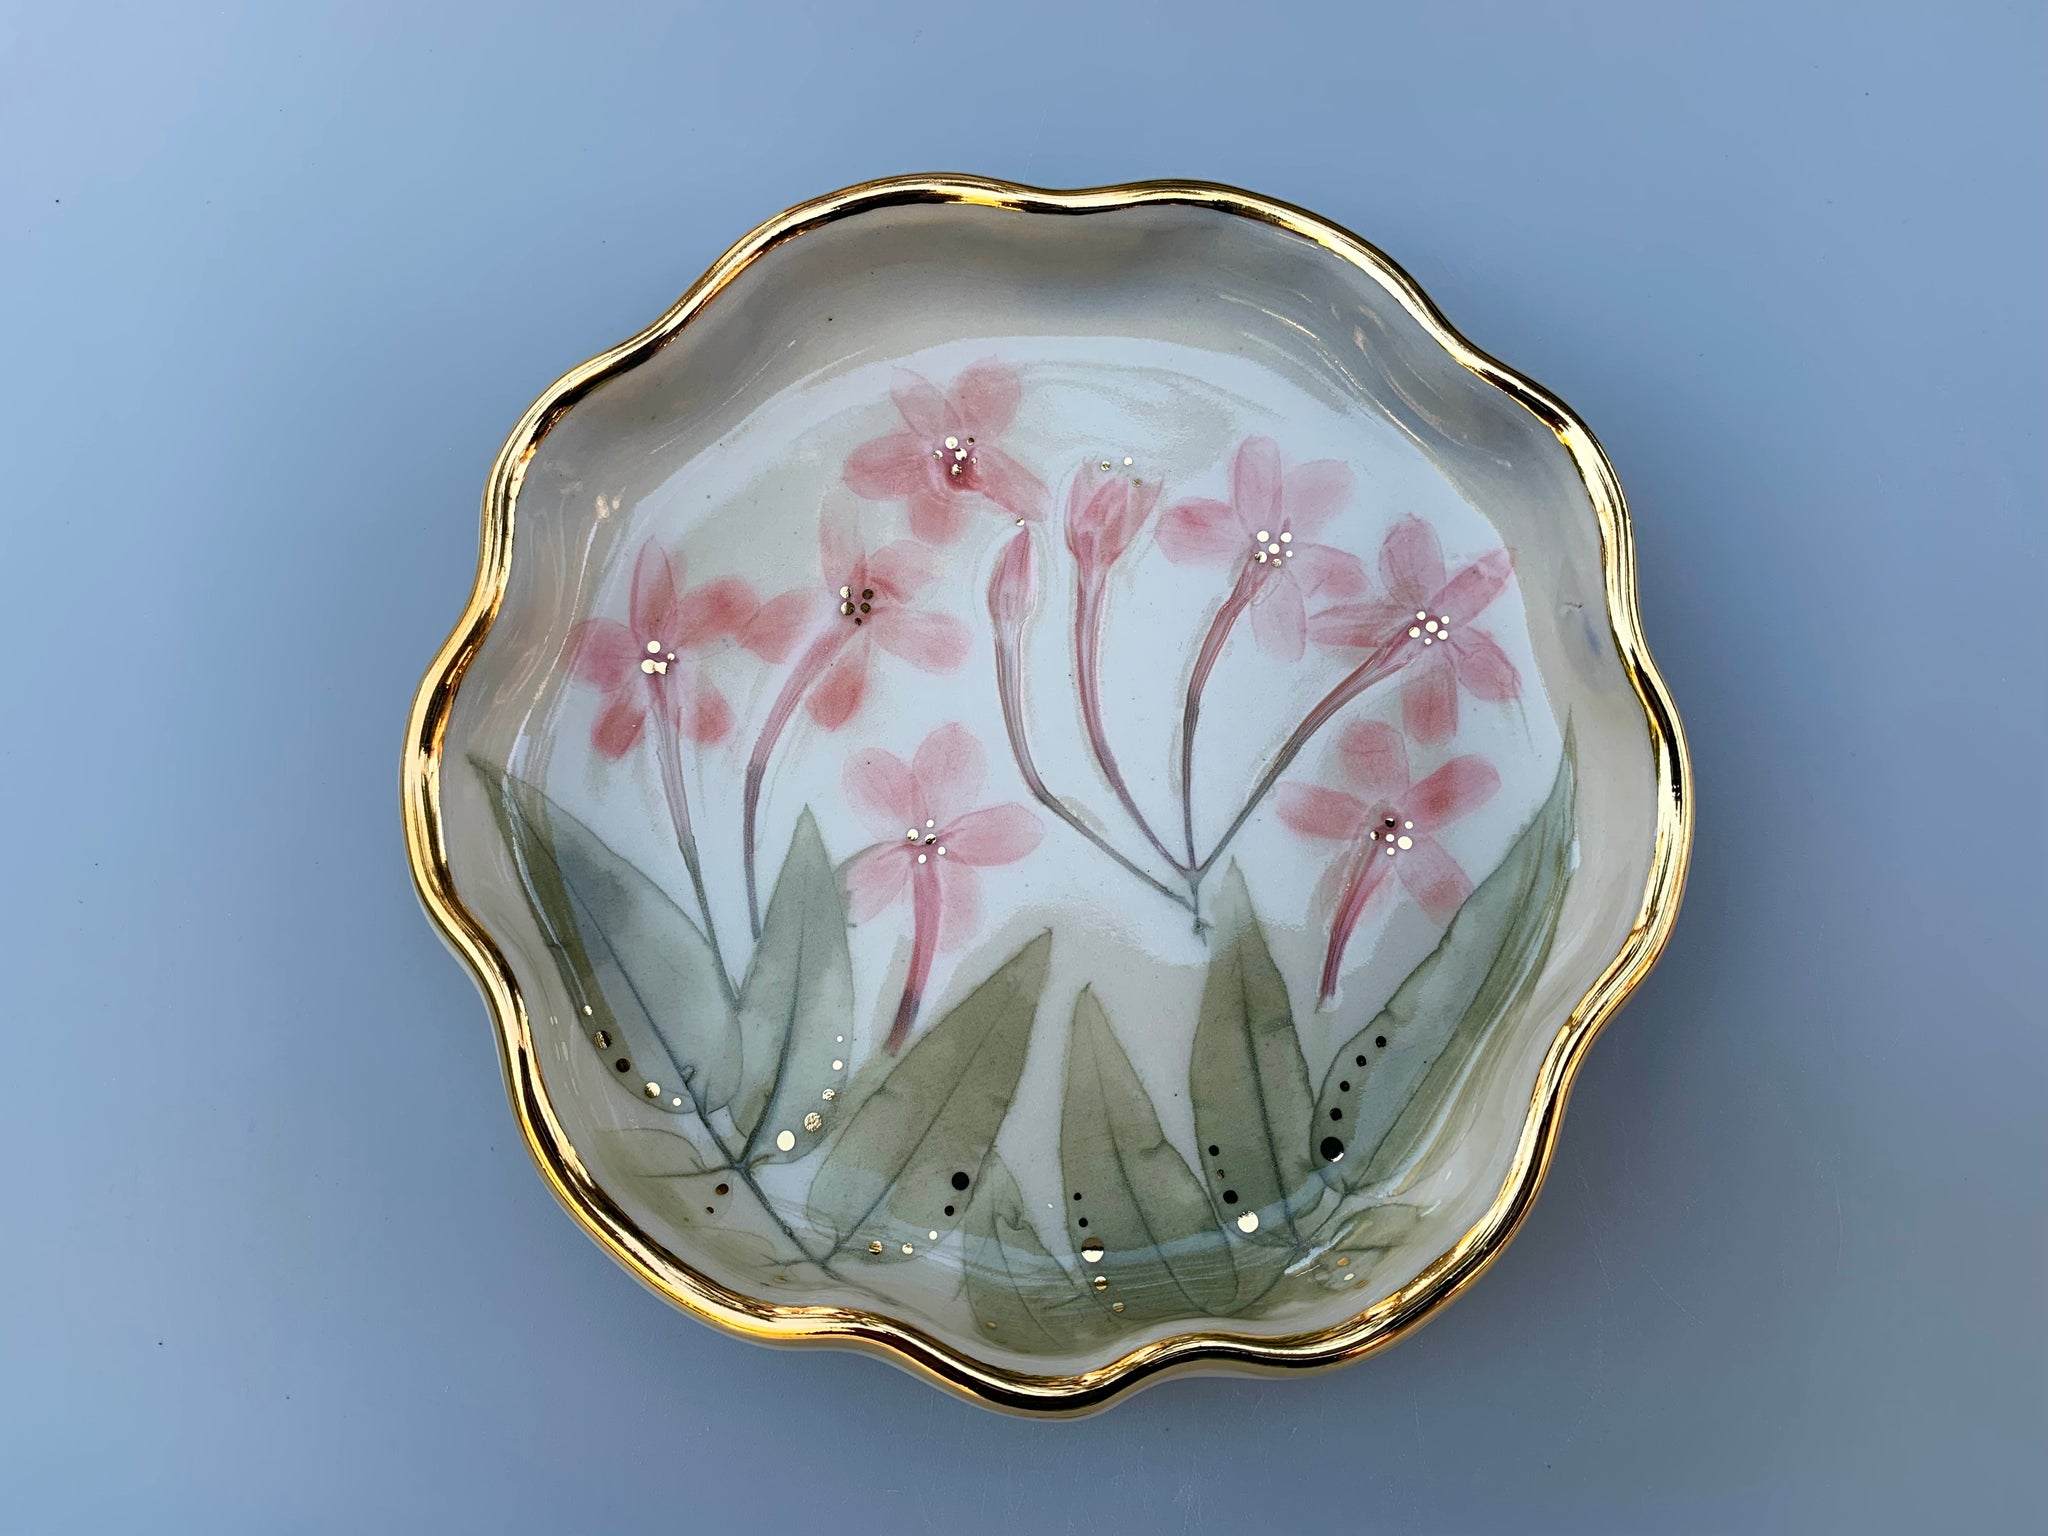 Pink Jasmine Flower Jewelry Dish with Gold Rim